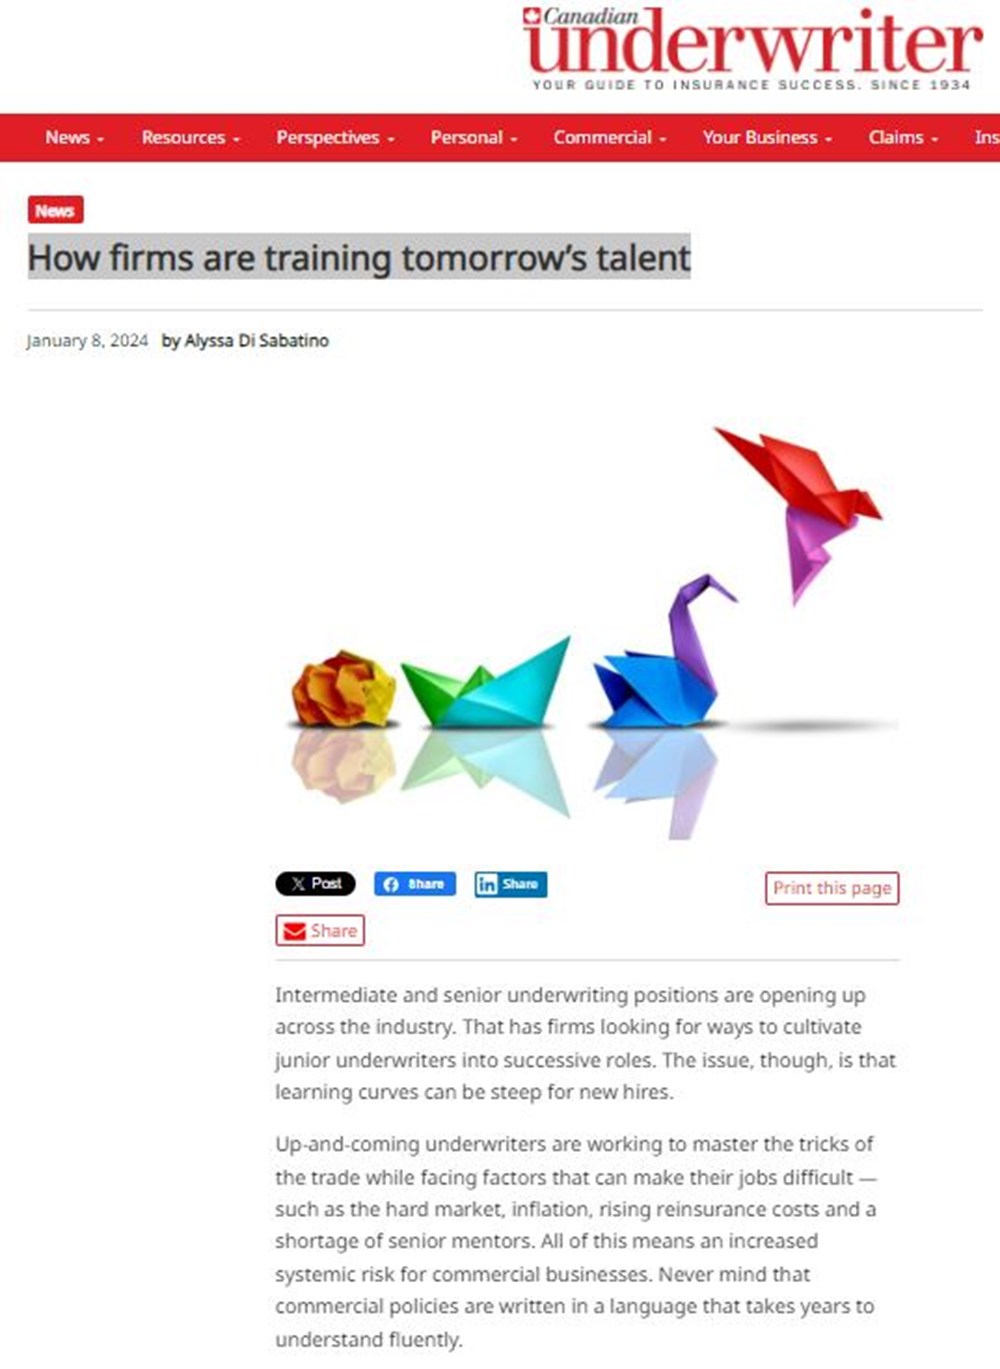 Une capture d'écran de l'article "How firms are training tomorrow's talent"